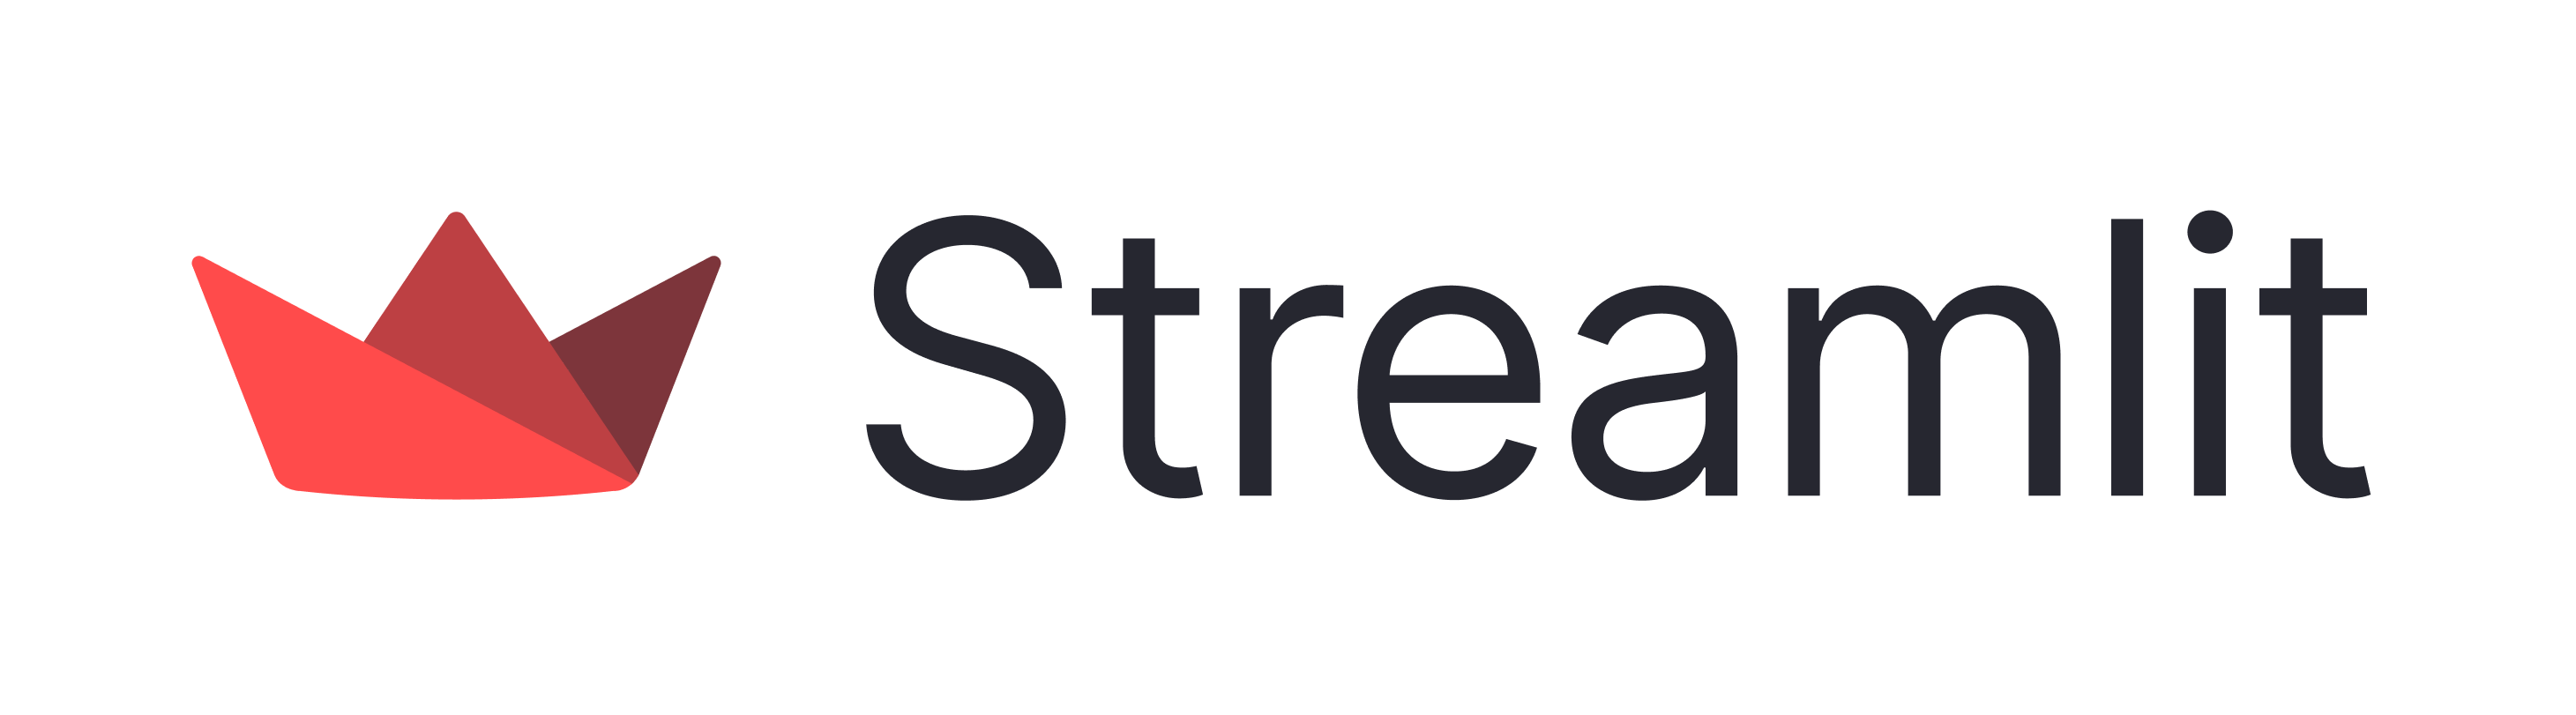 Streamlit horizontal logo on light background